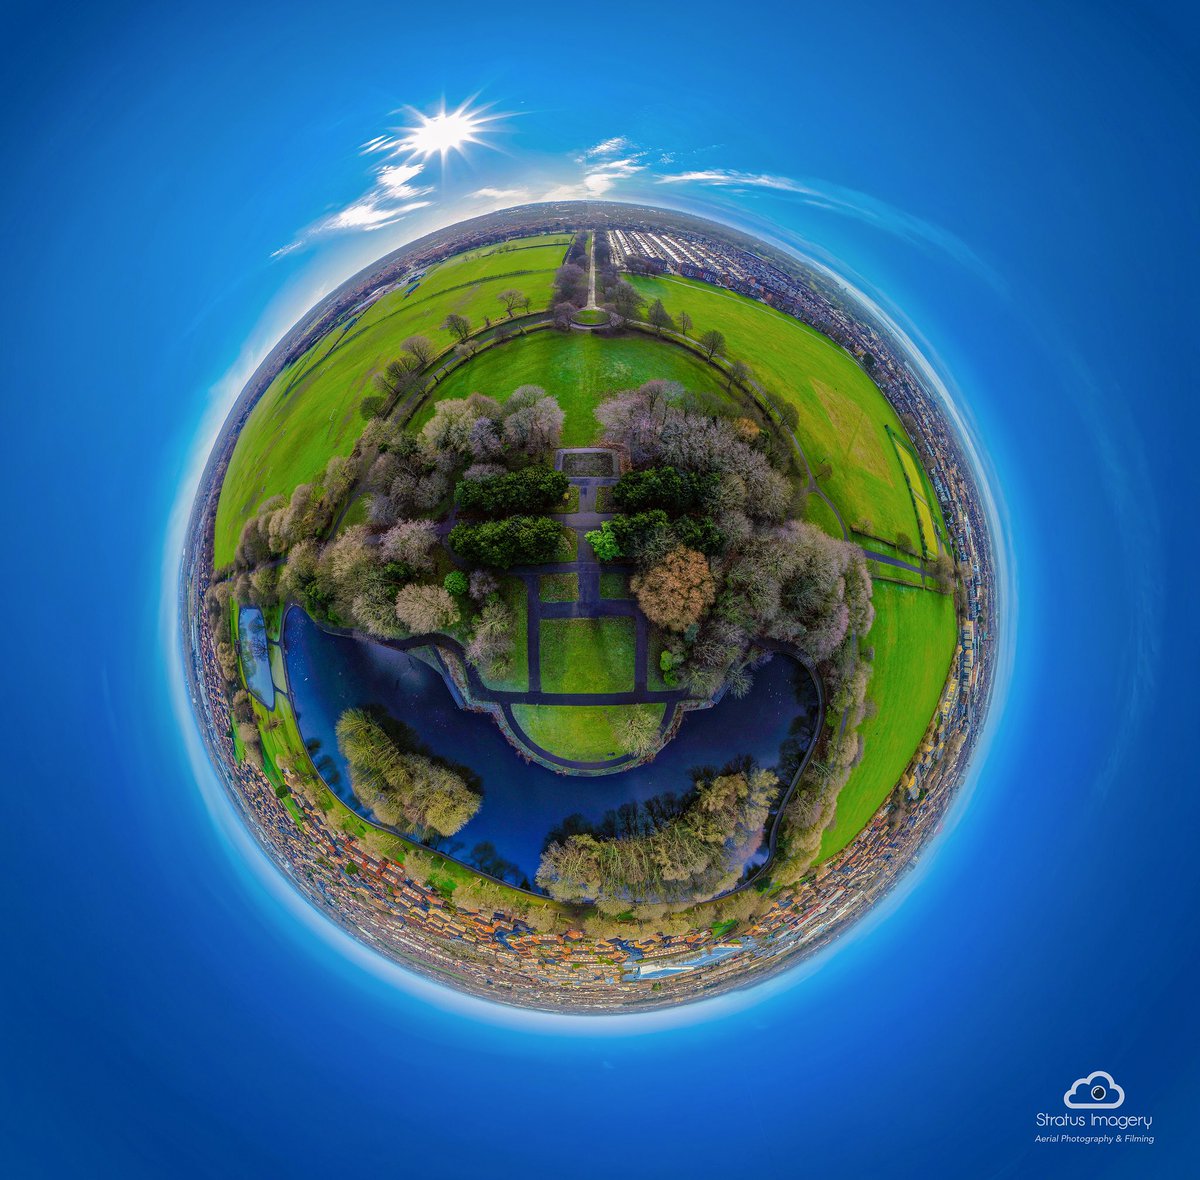 Aerial perspective of Walton Hall Park #liverpool #waltonhallpark #greenspaces #parks #protectgreenspaces #myparkmatters